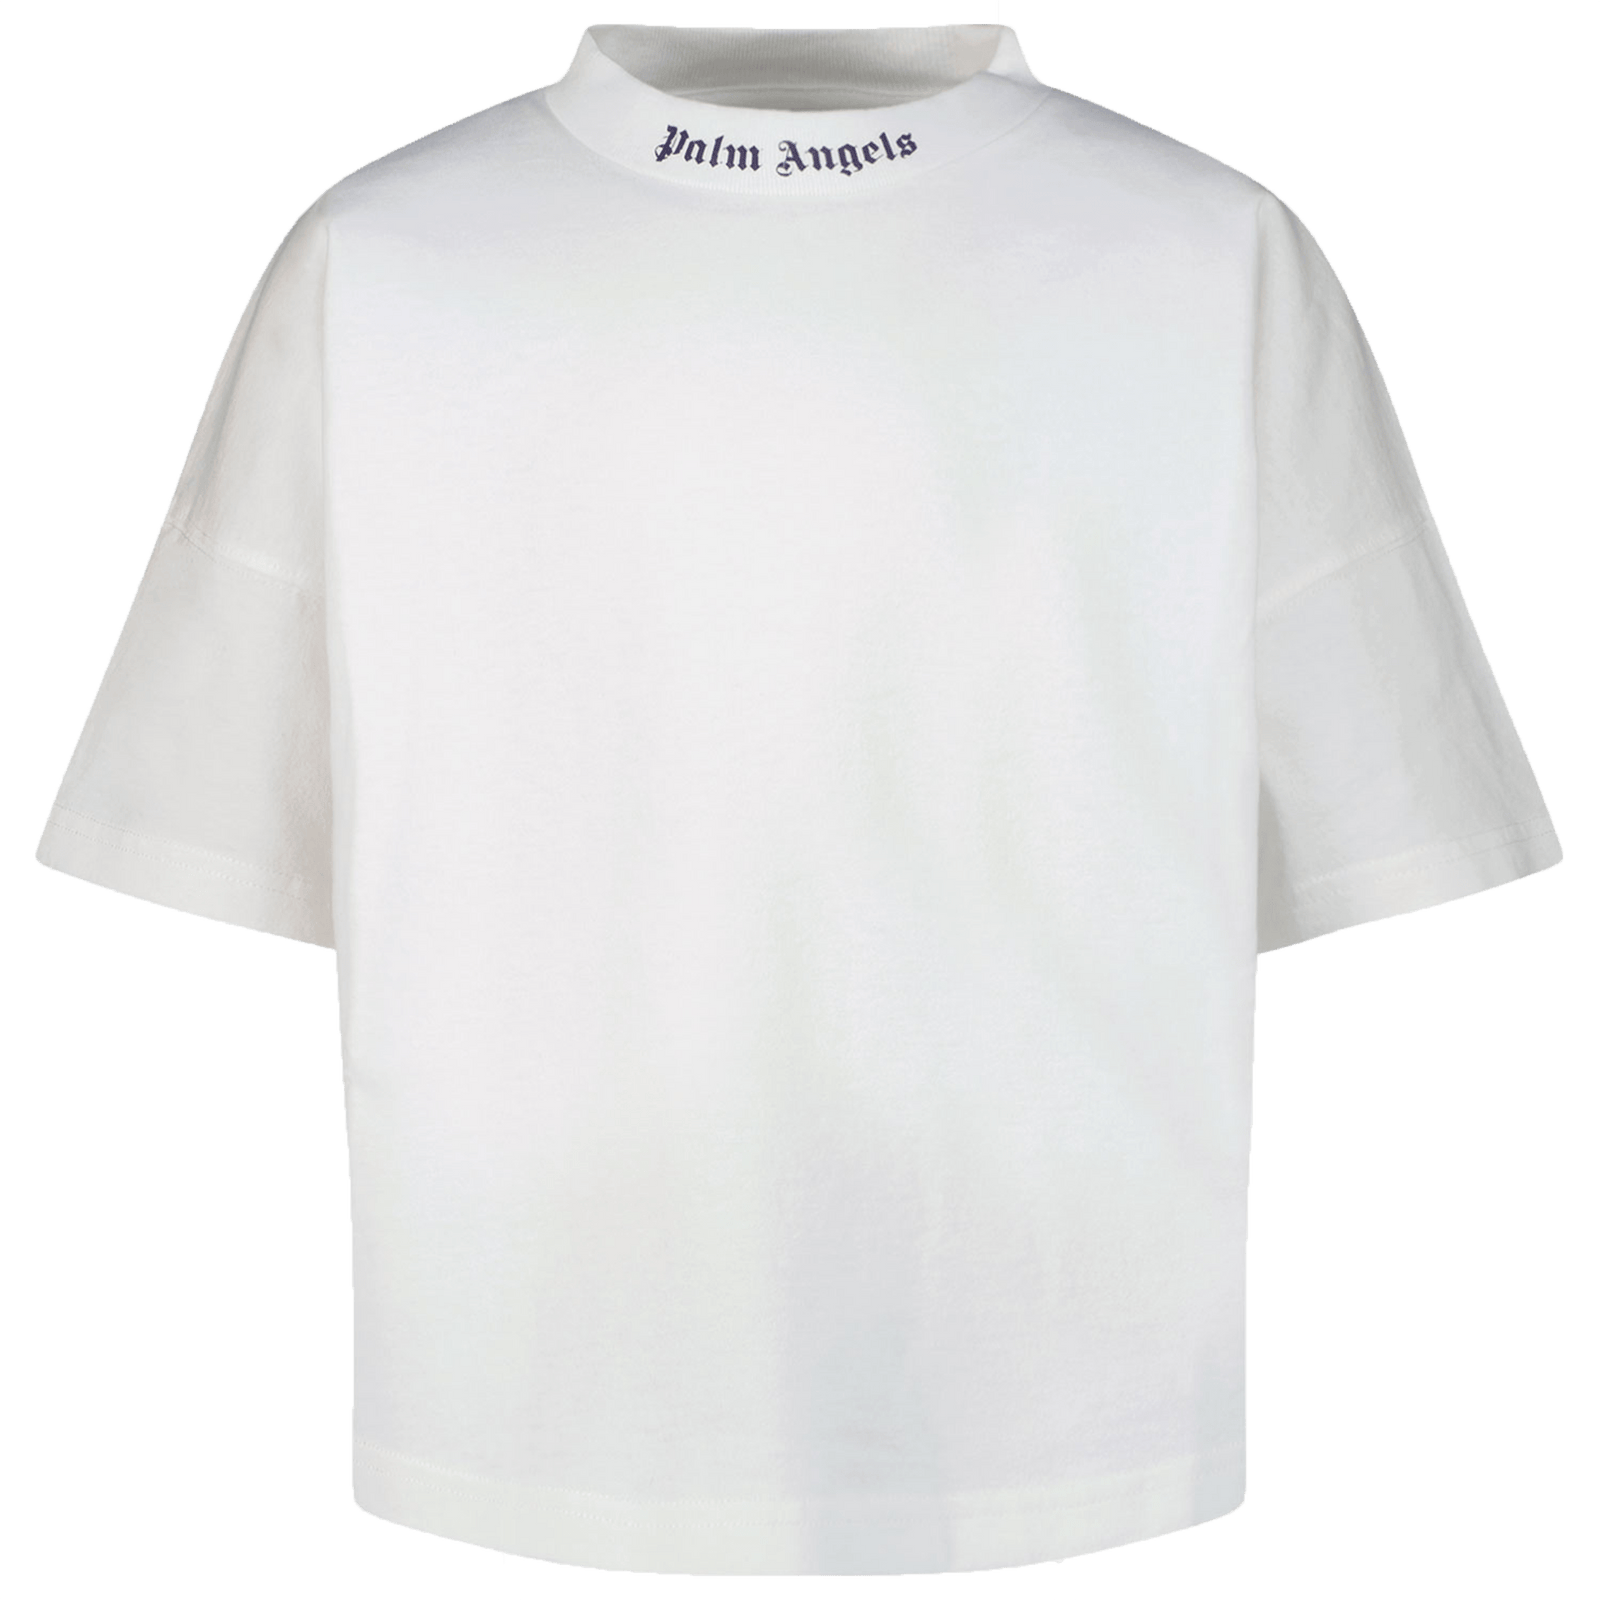 Palm Angels Kinder Unisex T-Shirt Wit 4Y